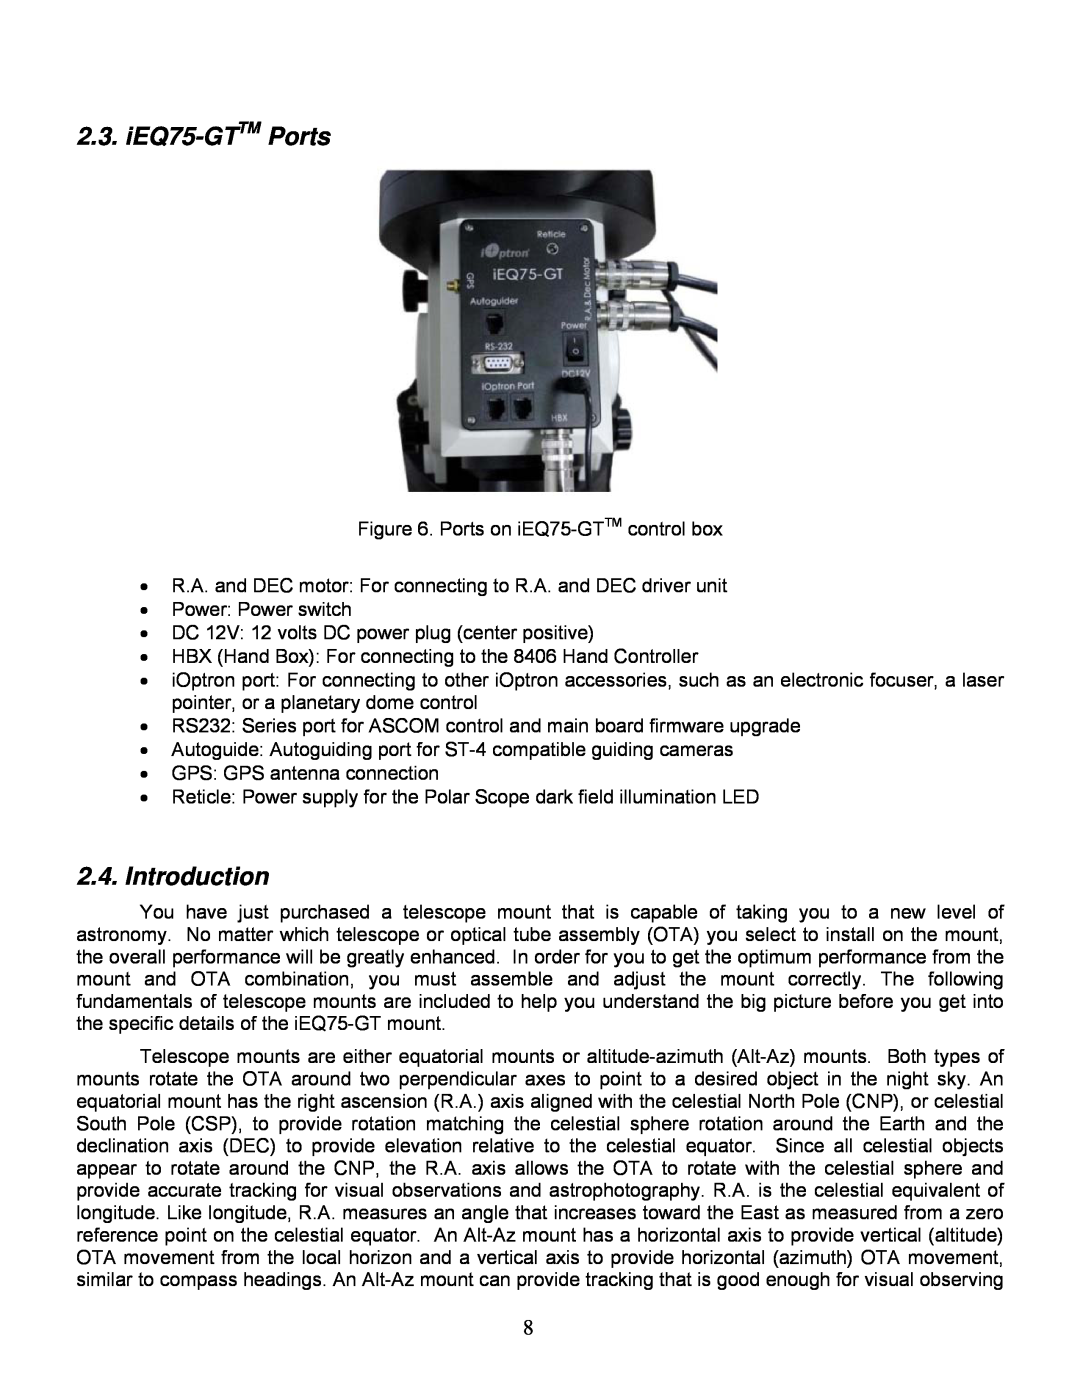 iOptron IEQ75-GTTM instruction manual iEQ75-GTTM Ports, Introduction 